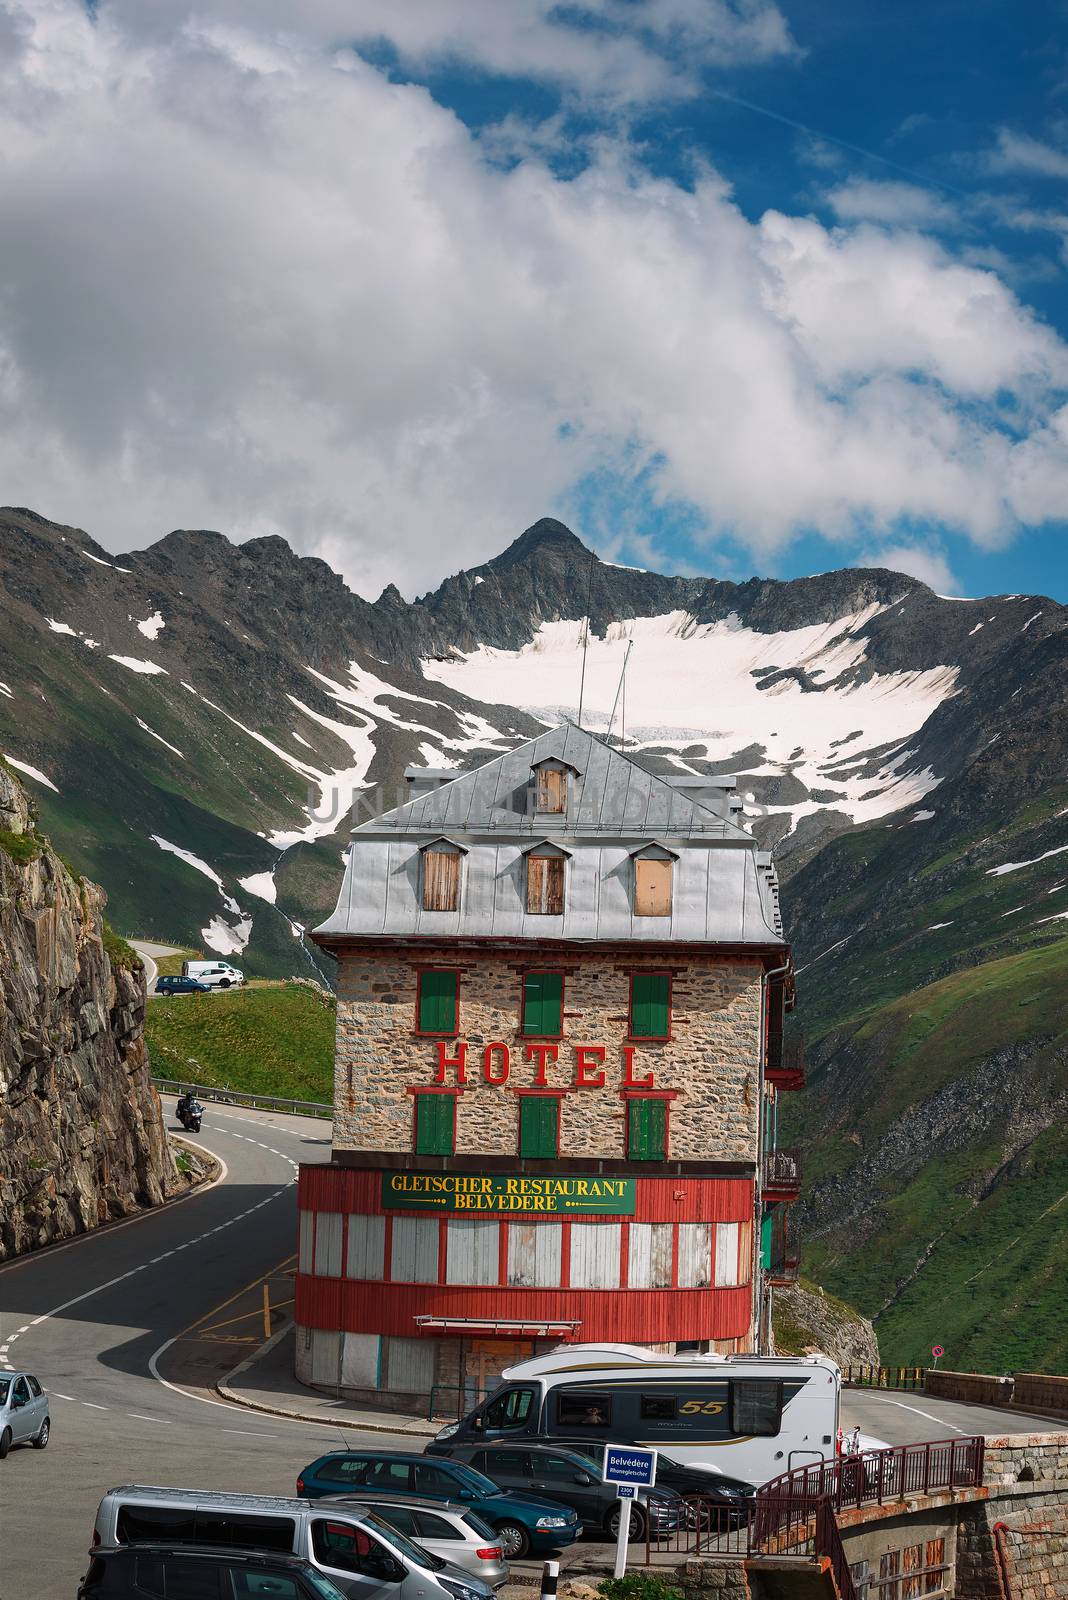 Closed mountain hotel located near the Rhone Glacier in Furka Pass, Switzerland by nickfox